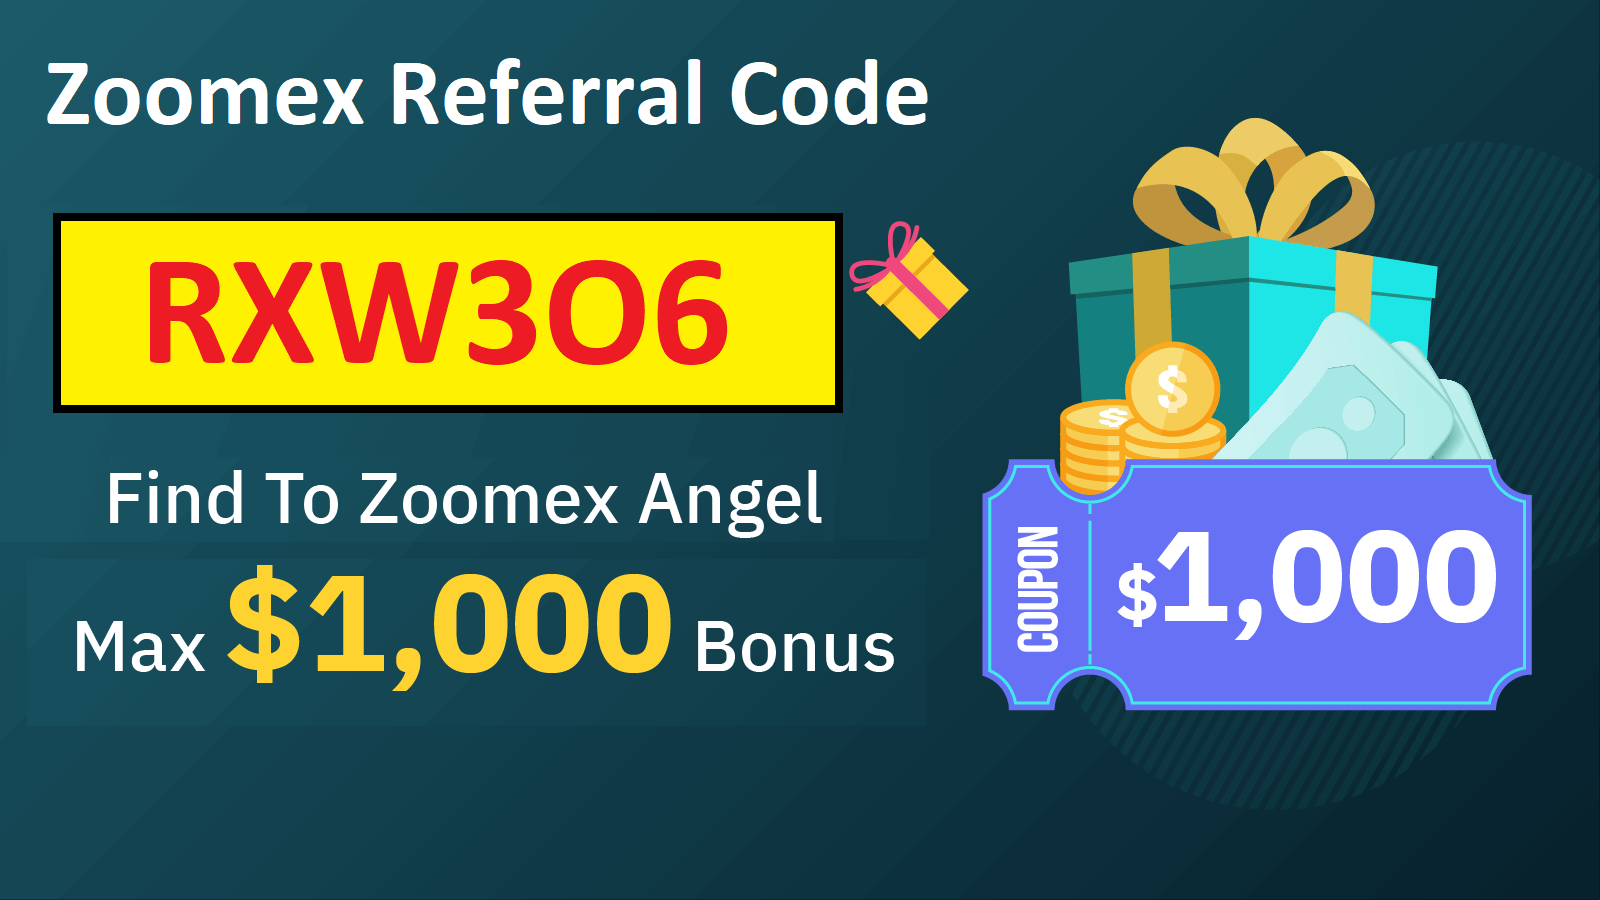 Zoomex Referral Code RXW3O6 Get Free 10 USDT